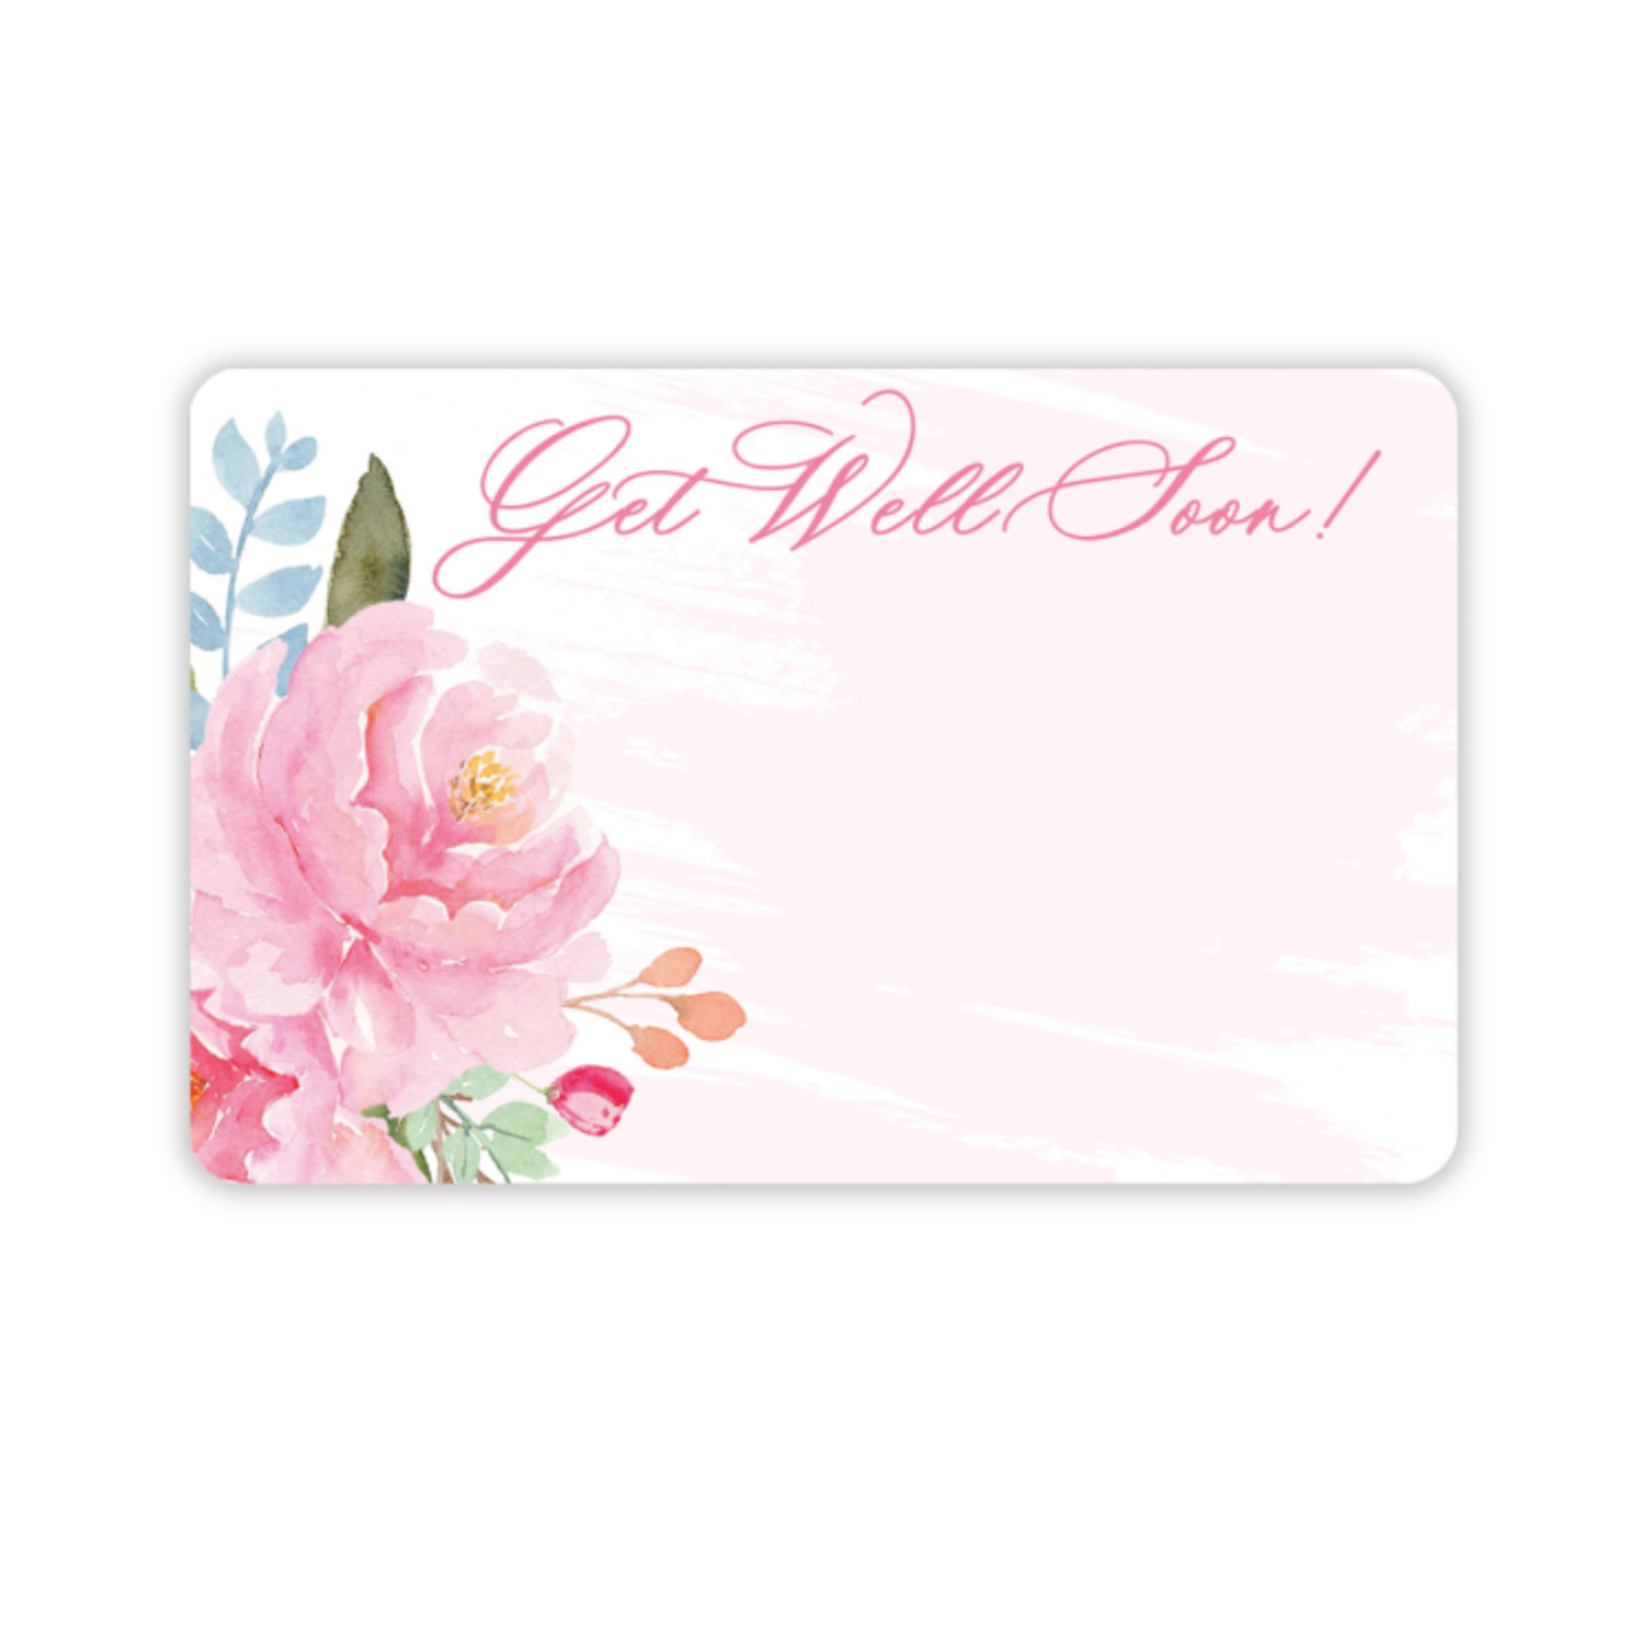 "GET WELL SOON" CAPRI CARD, BIG PINK FLOWER